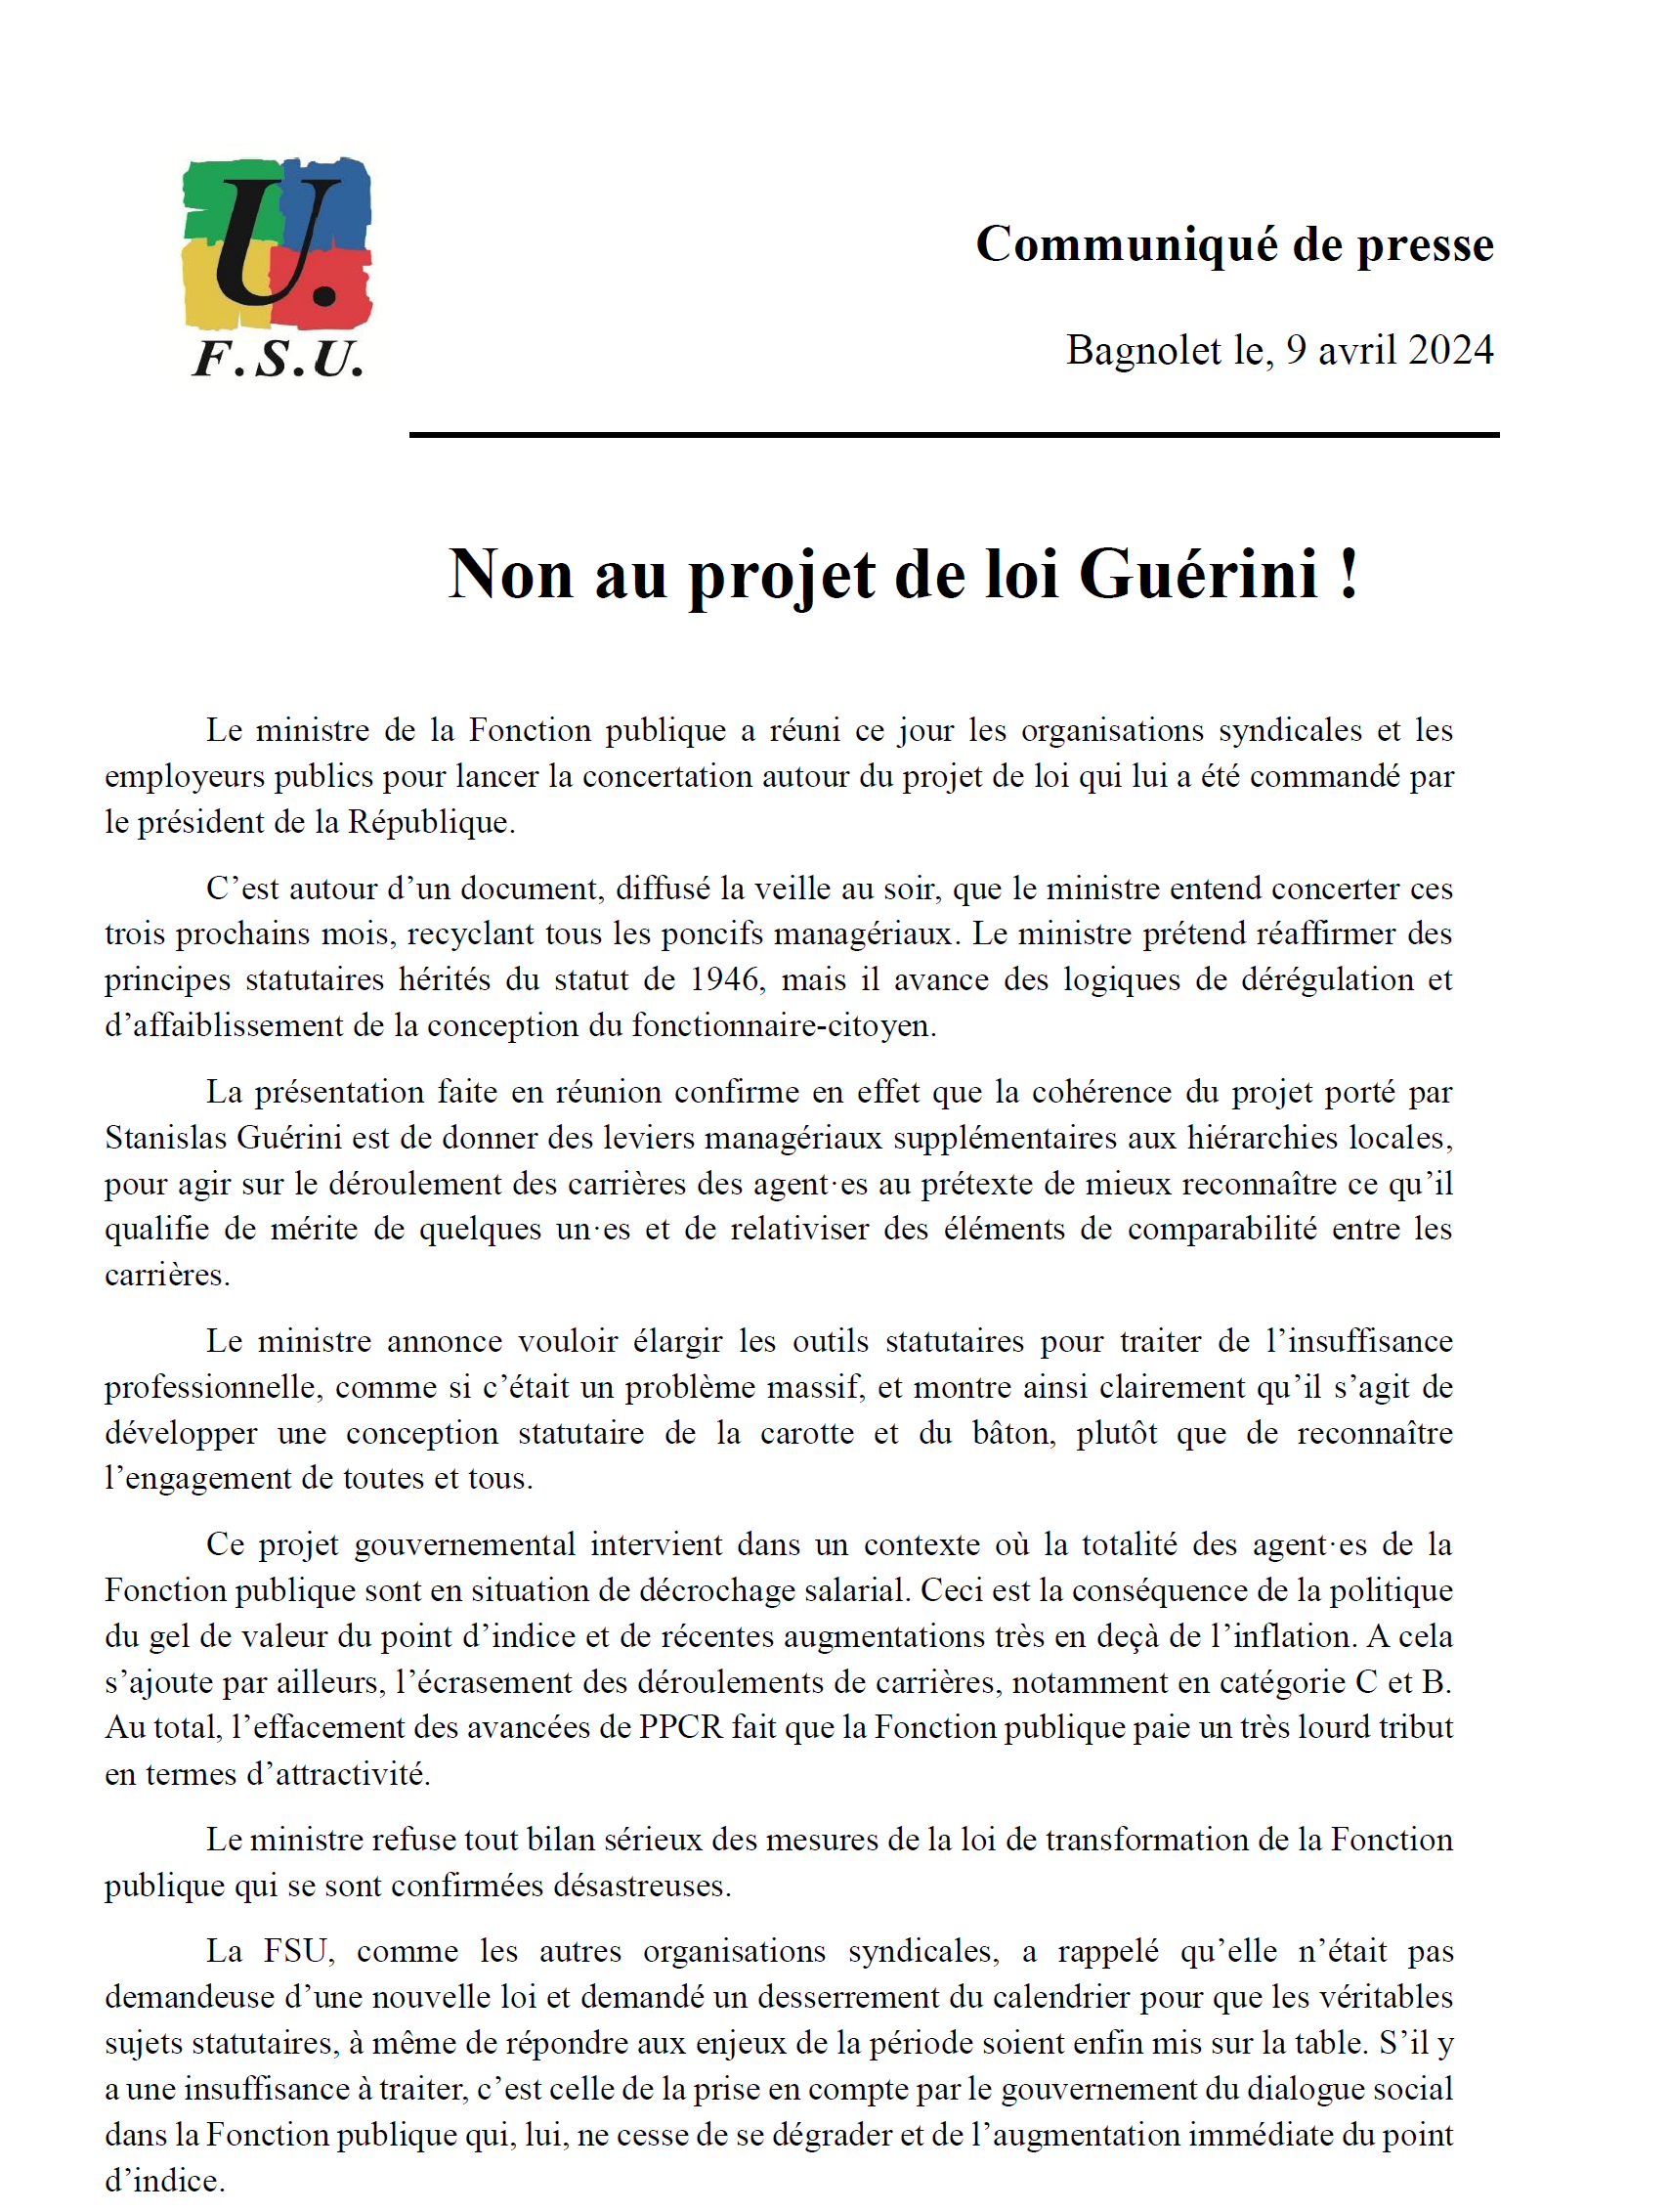 Non au projet de loi Guérini (1)